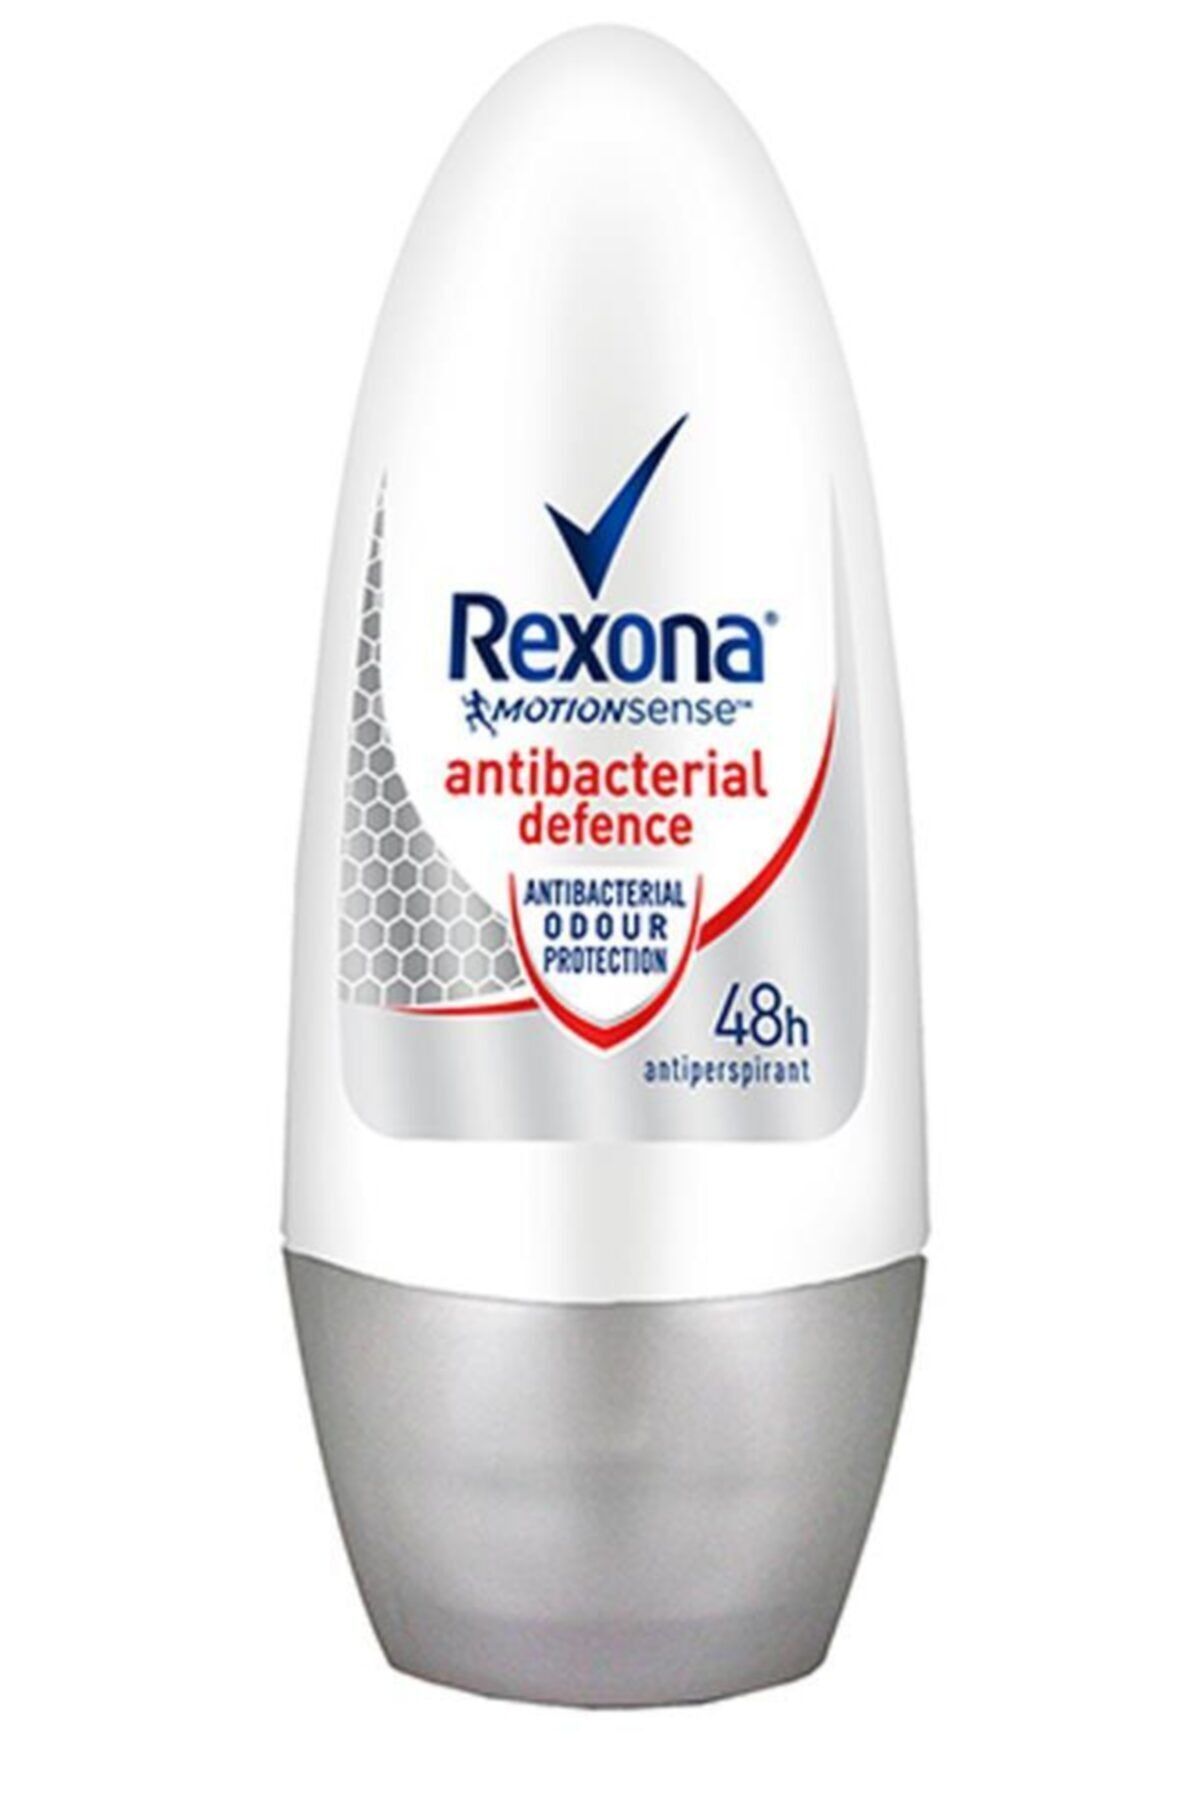 Rexona Roll-on Antibacterial Defense